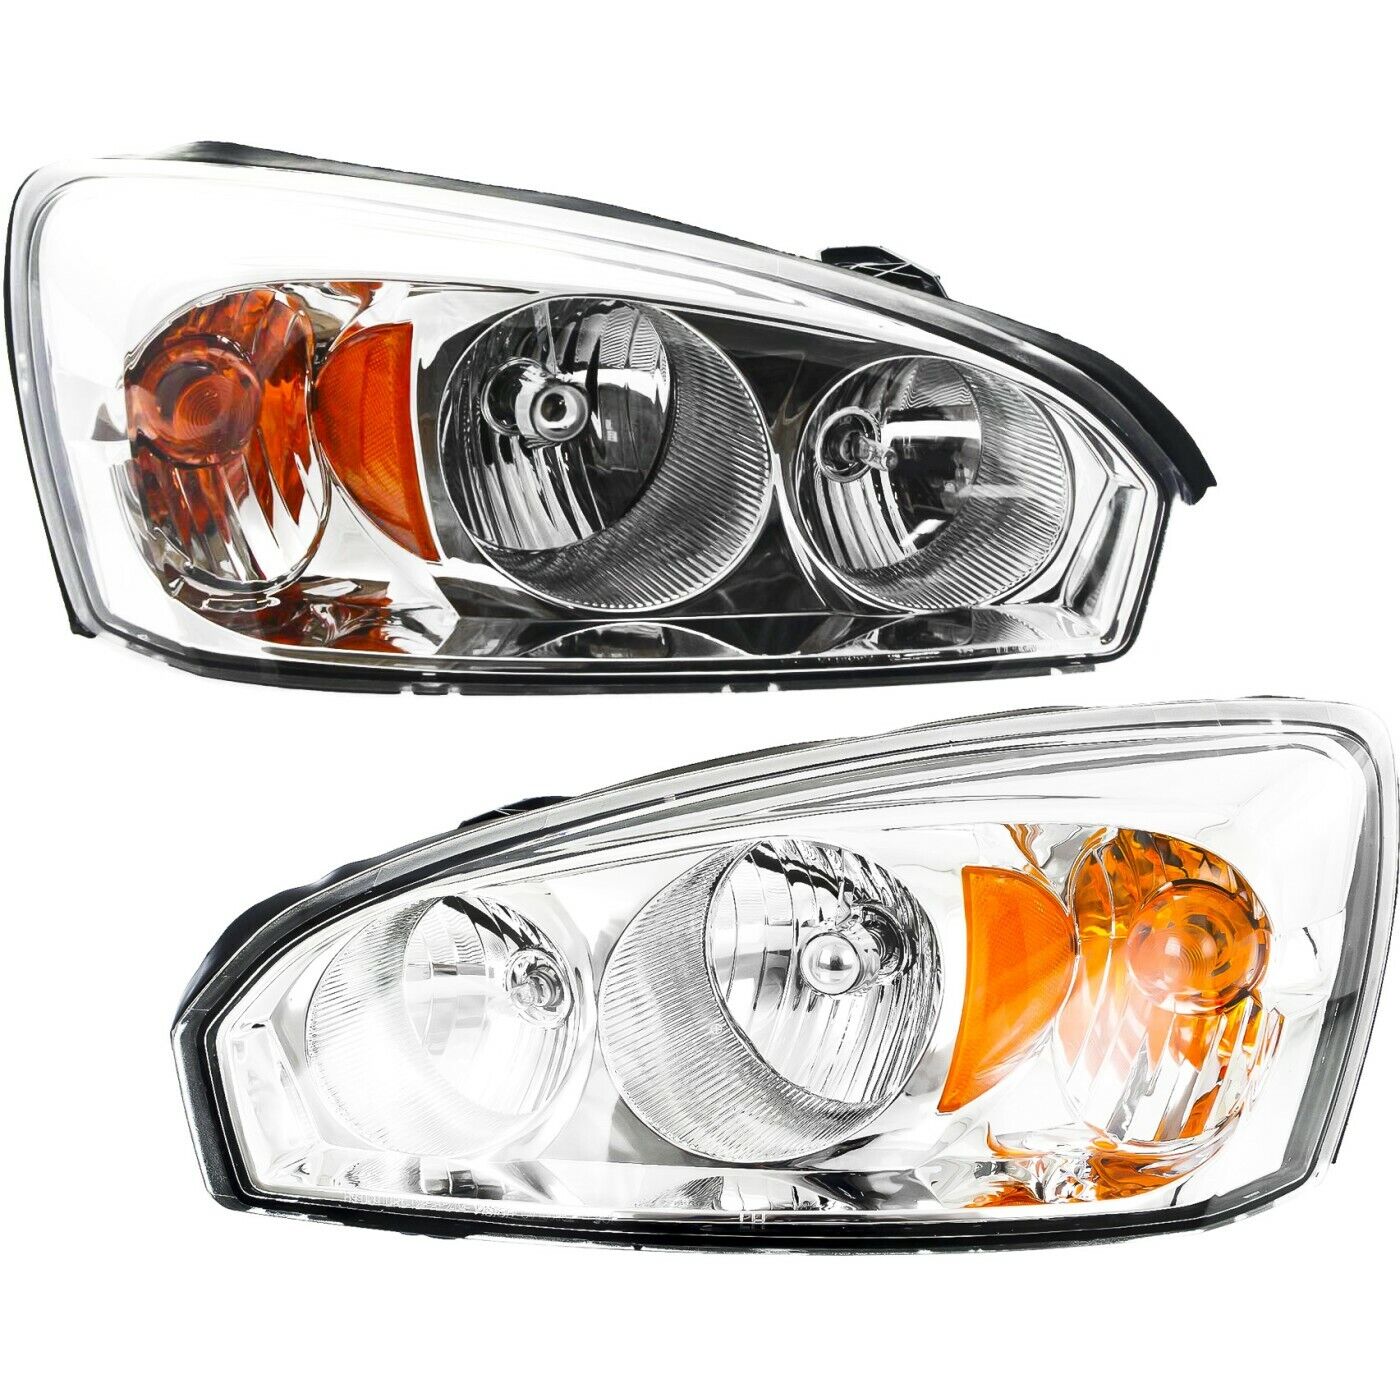 Headlights Headlamps Left & Right Pair Set for 04-08 Chevy Malibu